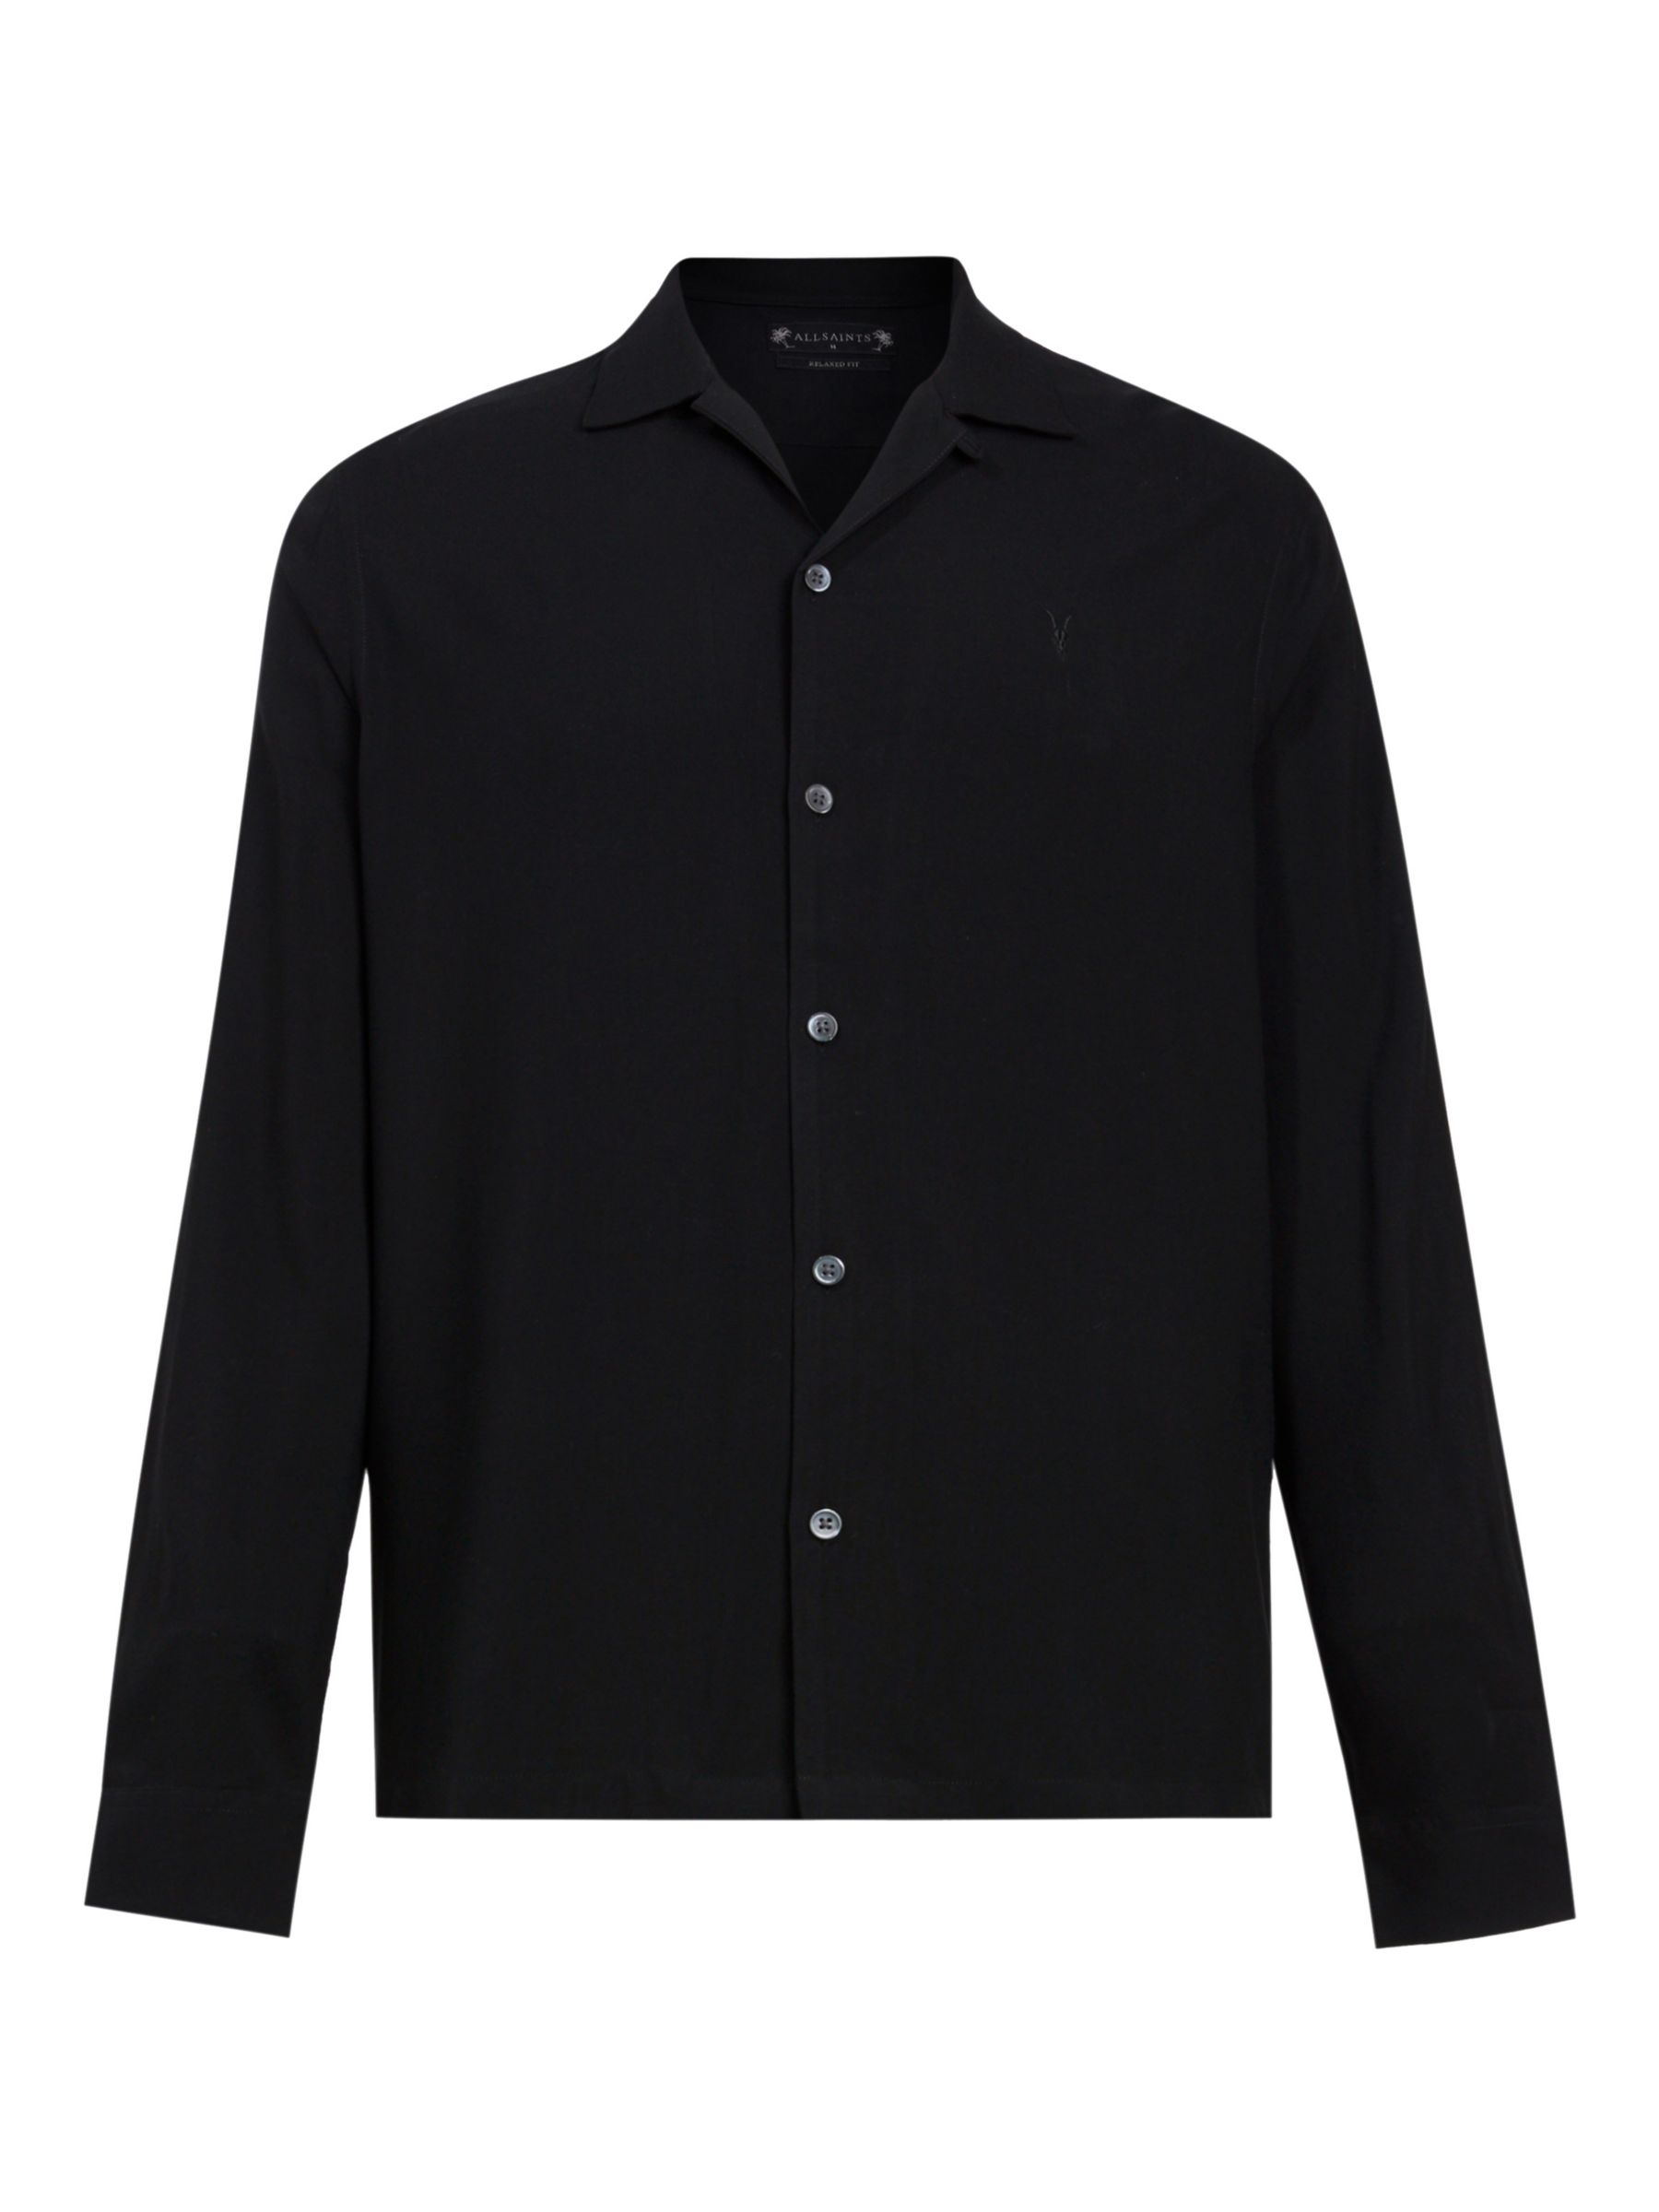 Buy AllSaint Venice Long Sleeve Shirt, Black Online at johnlewis.com